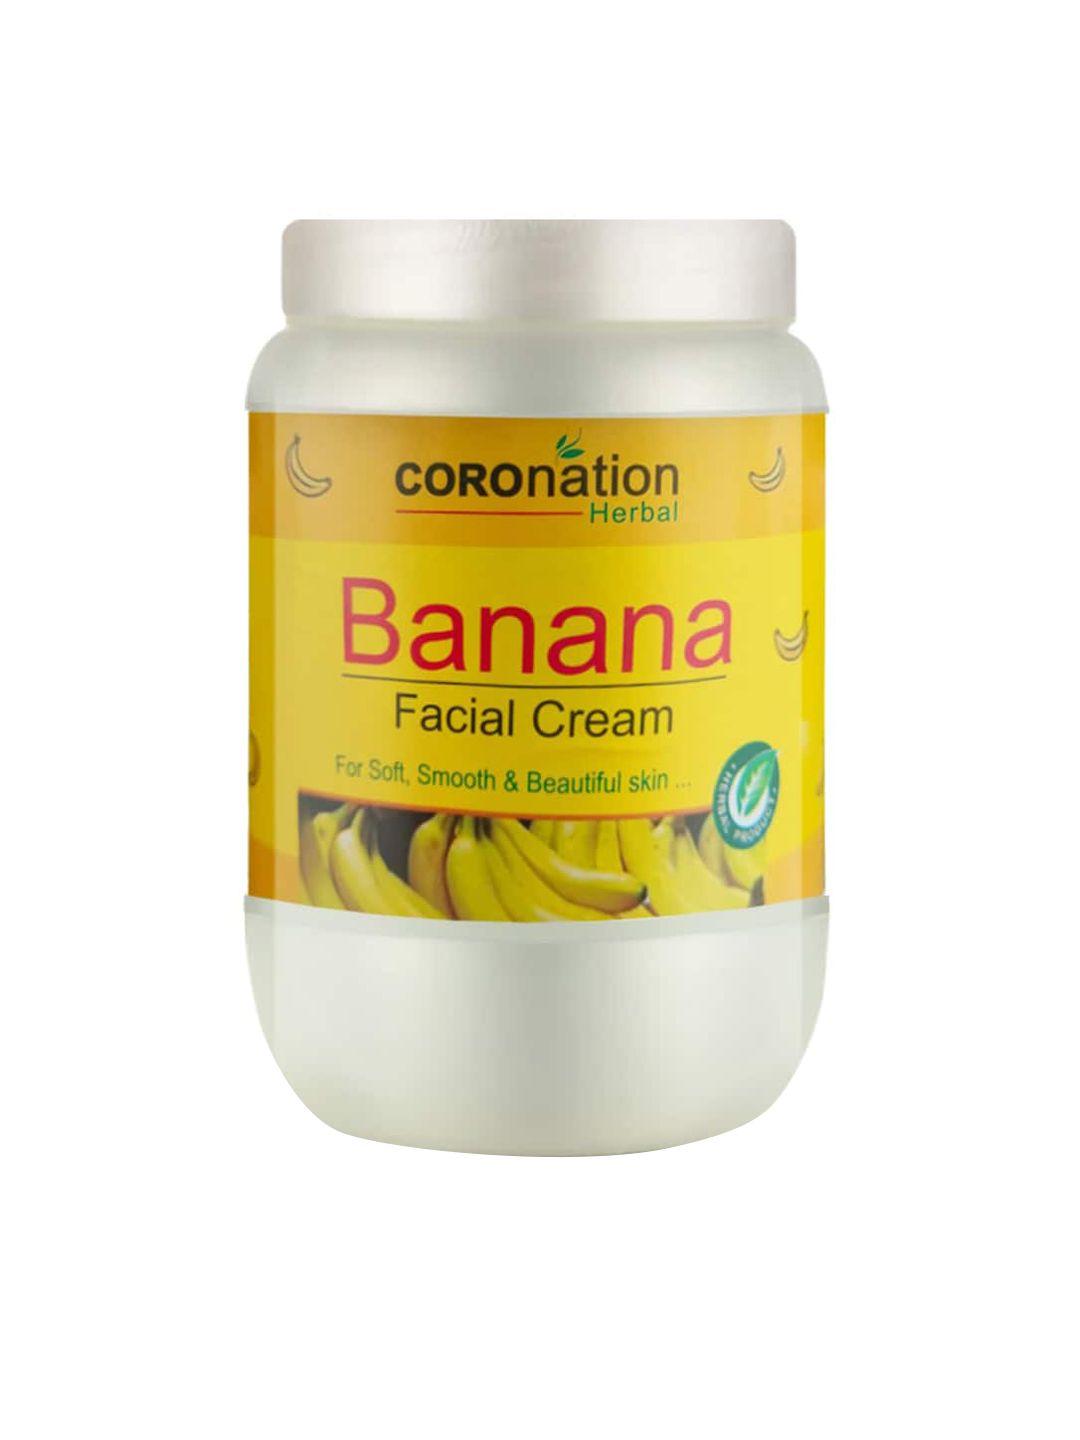 coronation herbal banana facial cream with bee wax & wheat germ oil - 750 ml